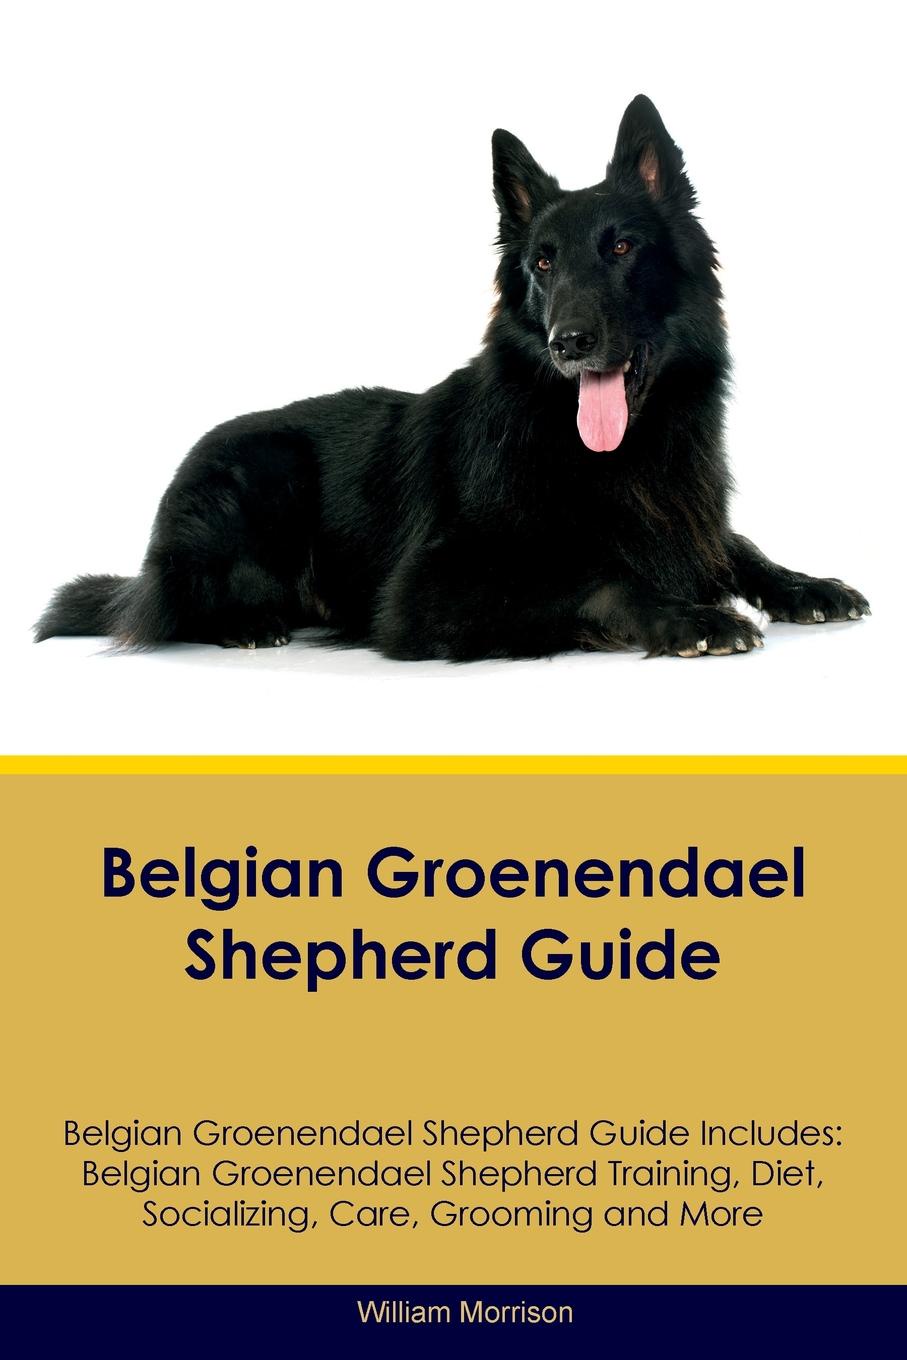 Belgian Groenendael Shepherd Guide Belgian Groenendael Shepherd Guide Includes. Belgian Groenendael Shepherd Training, Diet, Socializing, Care, Grooming, Breeding and More